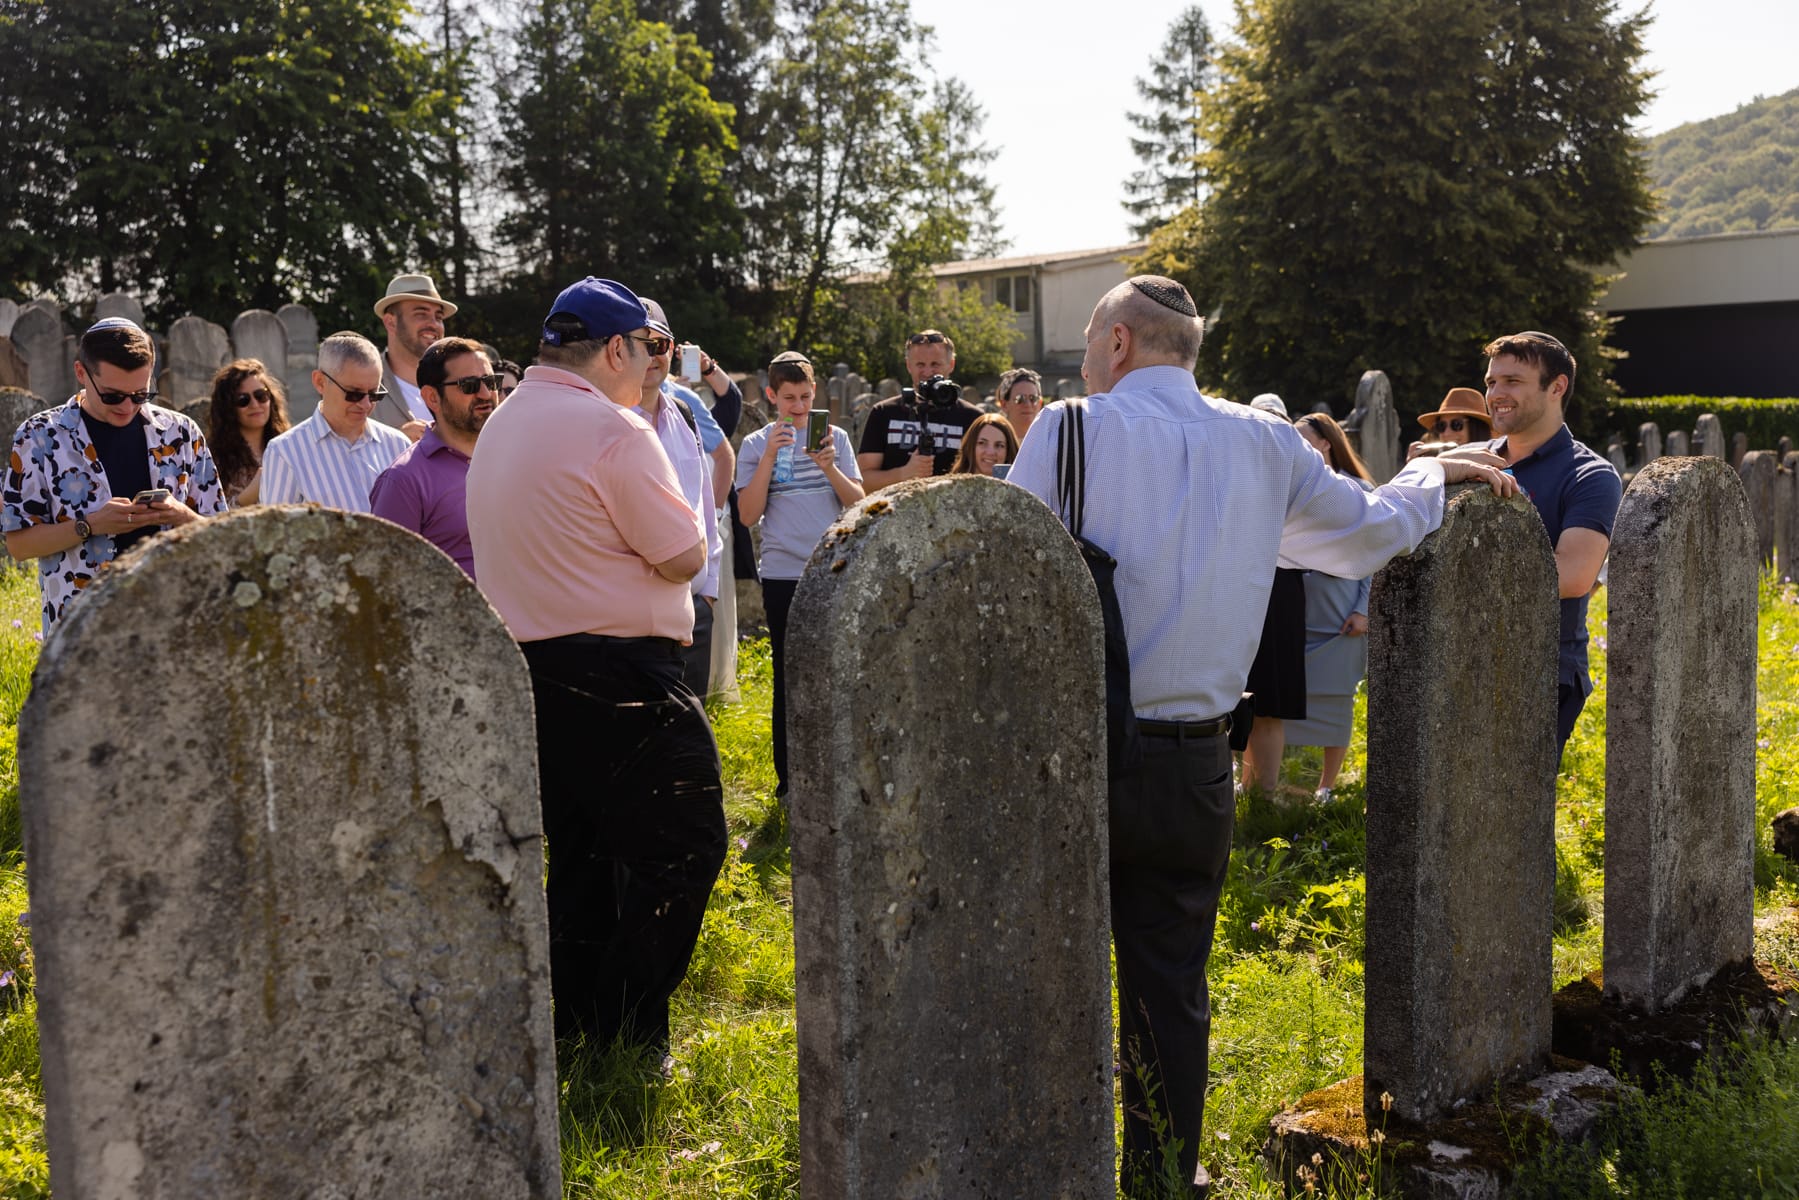 The Jewish Bardejov walking tour began in the Jewish Cemetery.